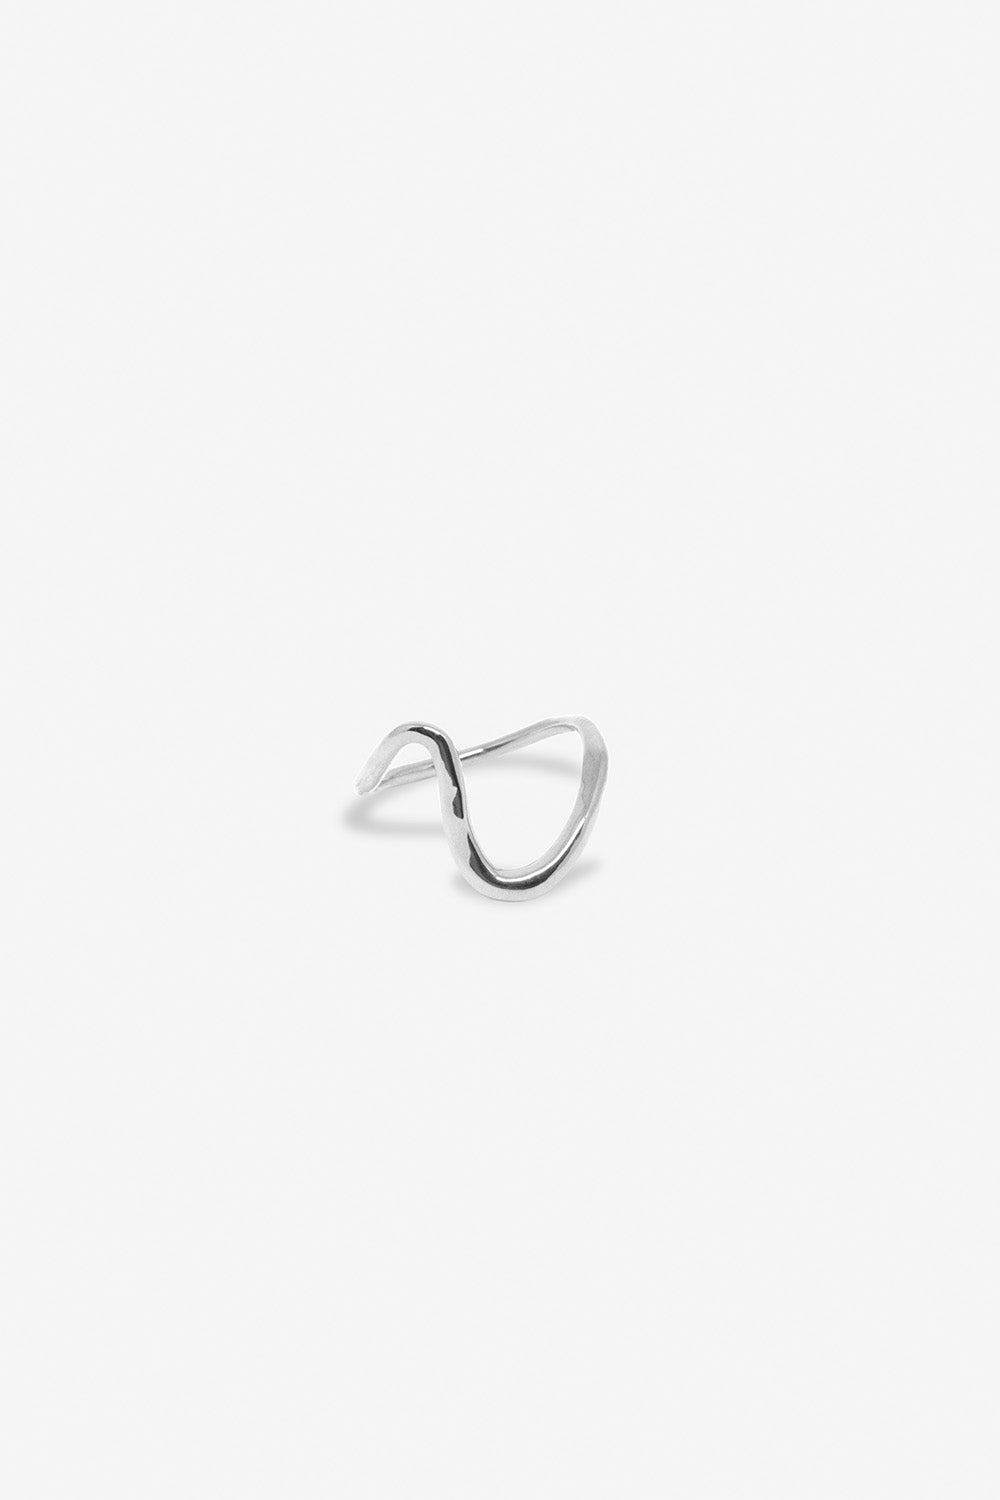 Swirl Ring - Small - Silver